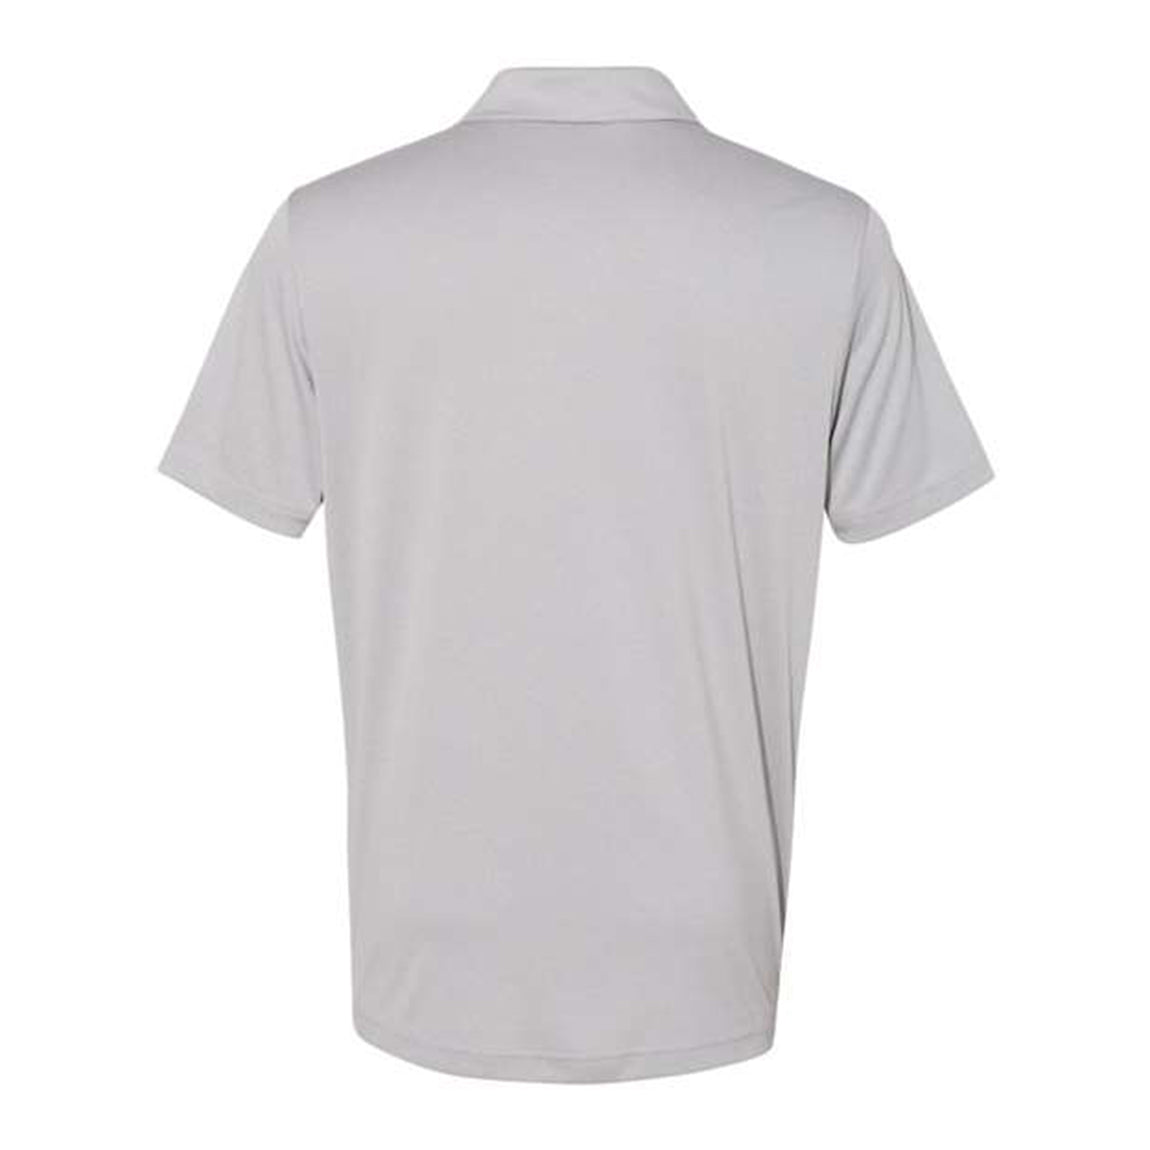 Heathered Sport Shirt